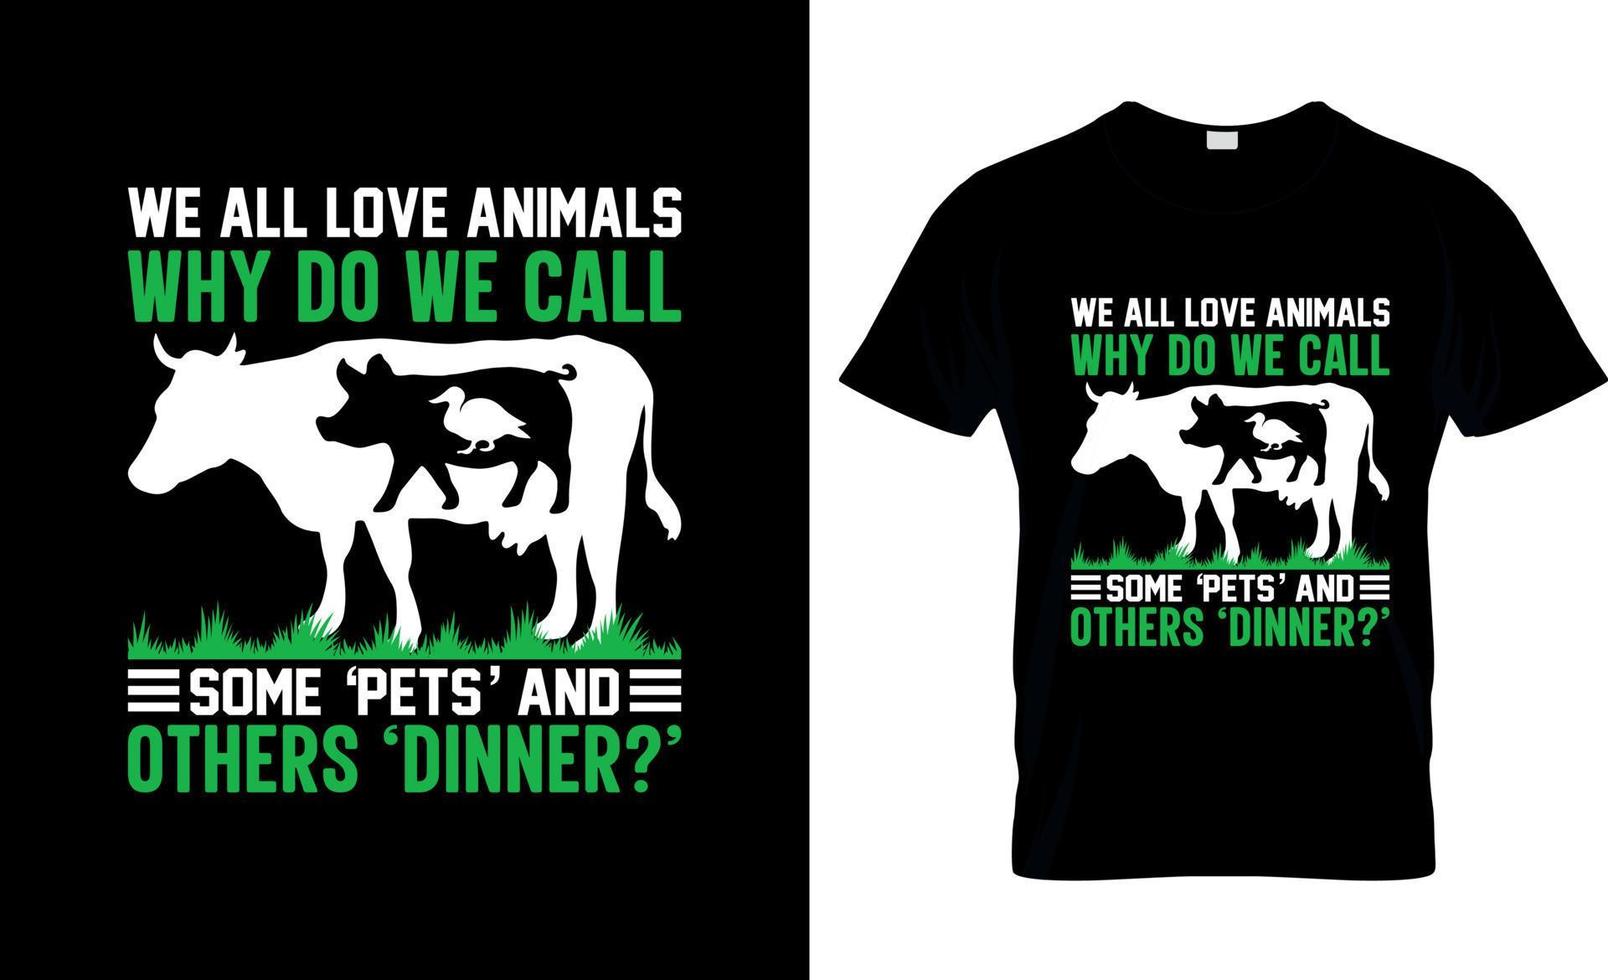 vegan t-shirt design, vegan t-shirt slogan och kläder design, vegan typografi, vegan vektor, vegan illustration vektor